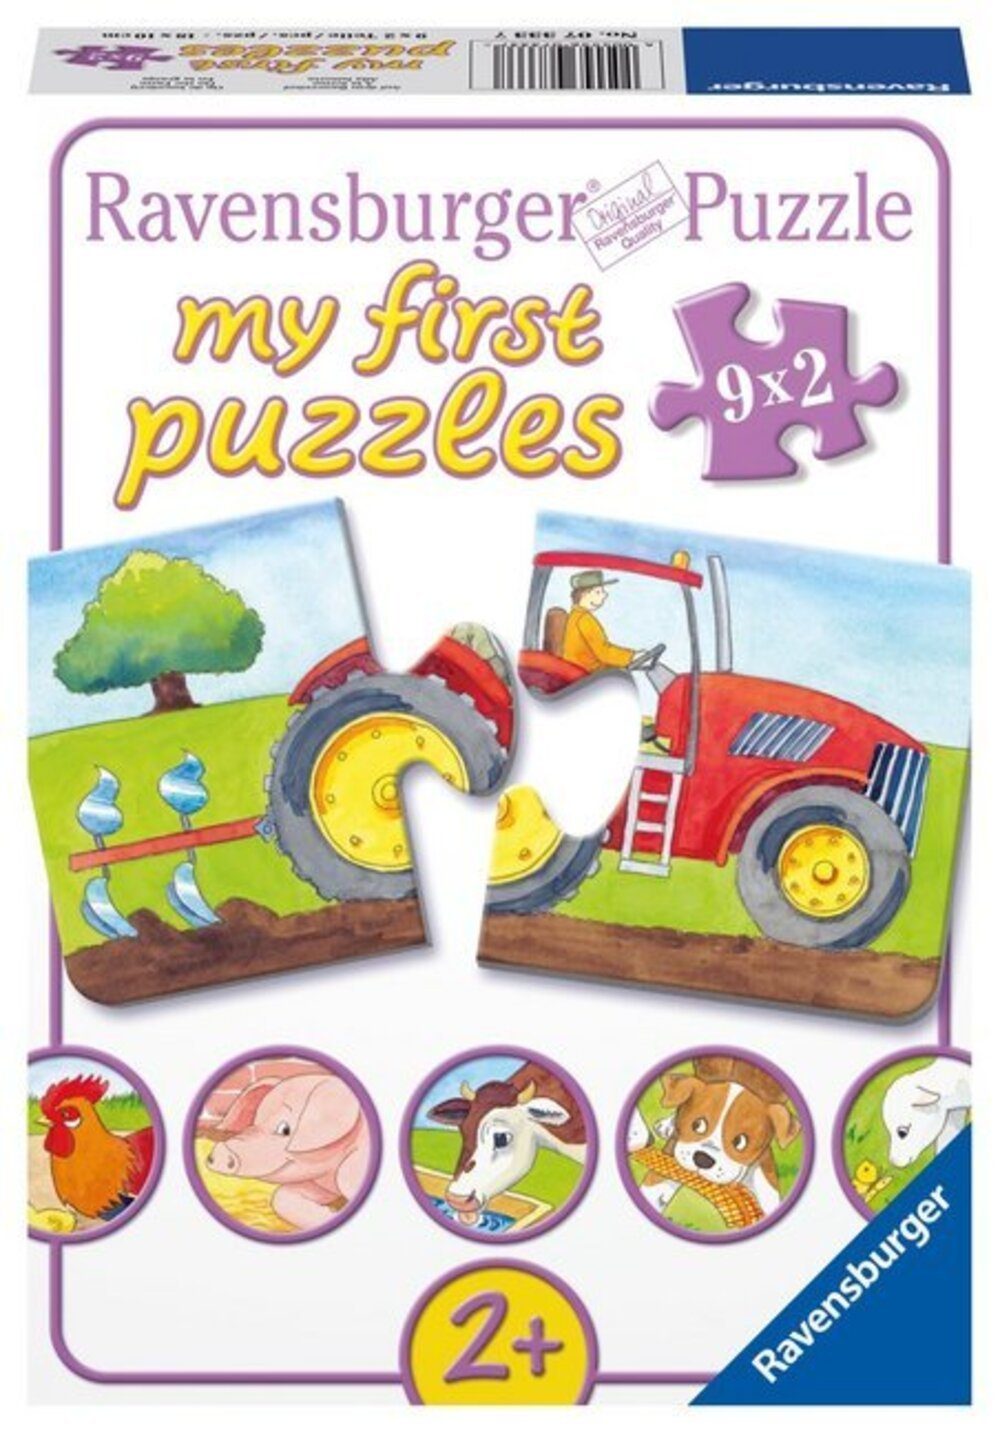 Ravensburger Puzzle Ravensburger Kinderpuzzle - 07333 Auf dem Bauernhof - my first..., 19 Puzzleteile